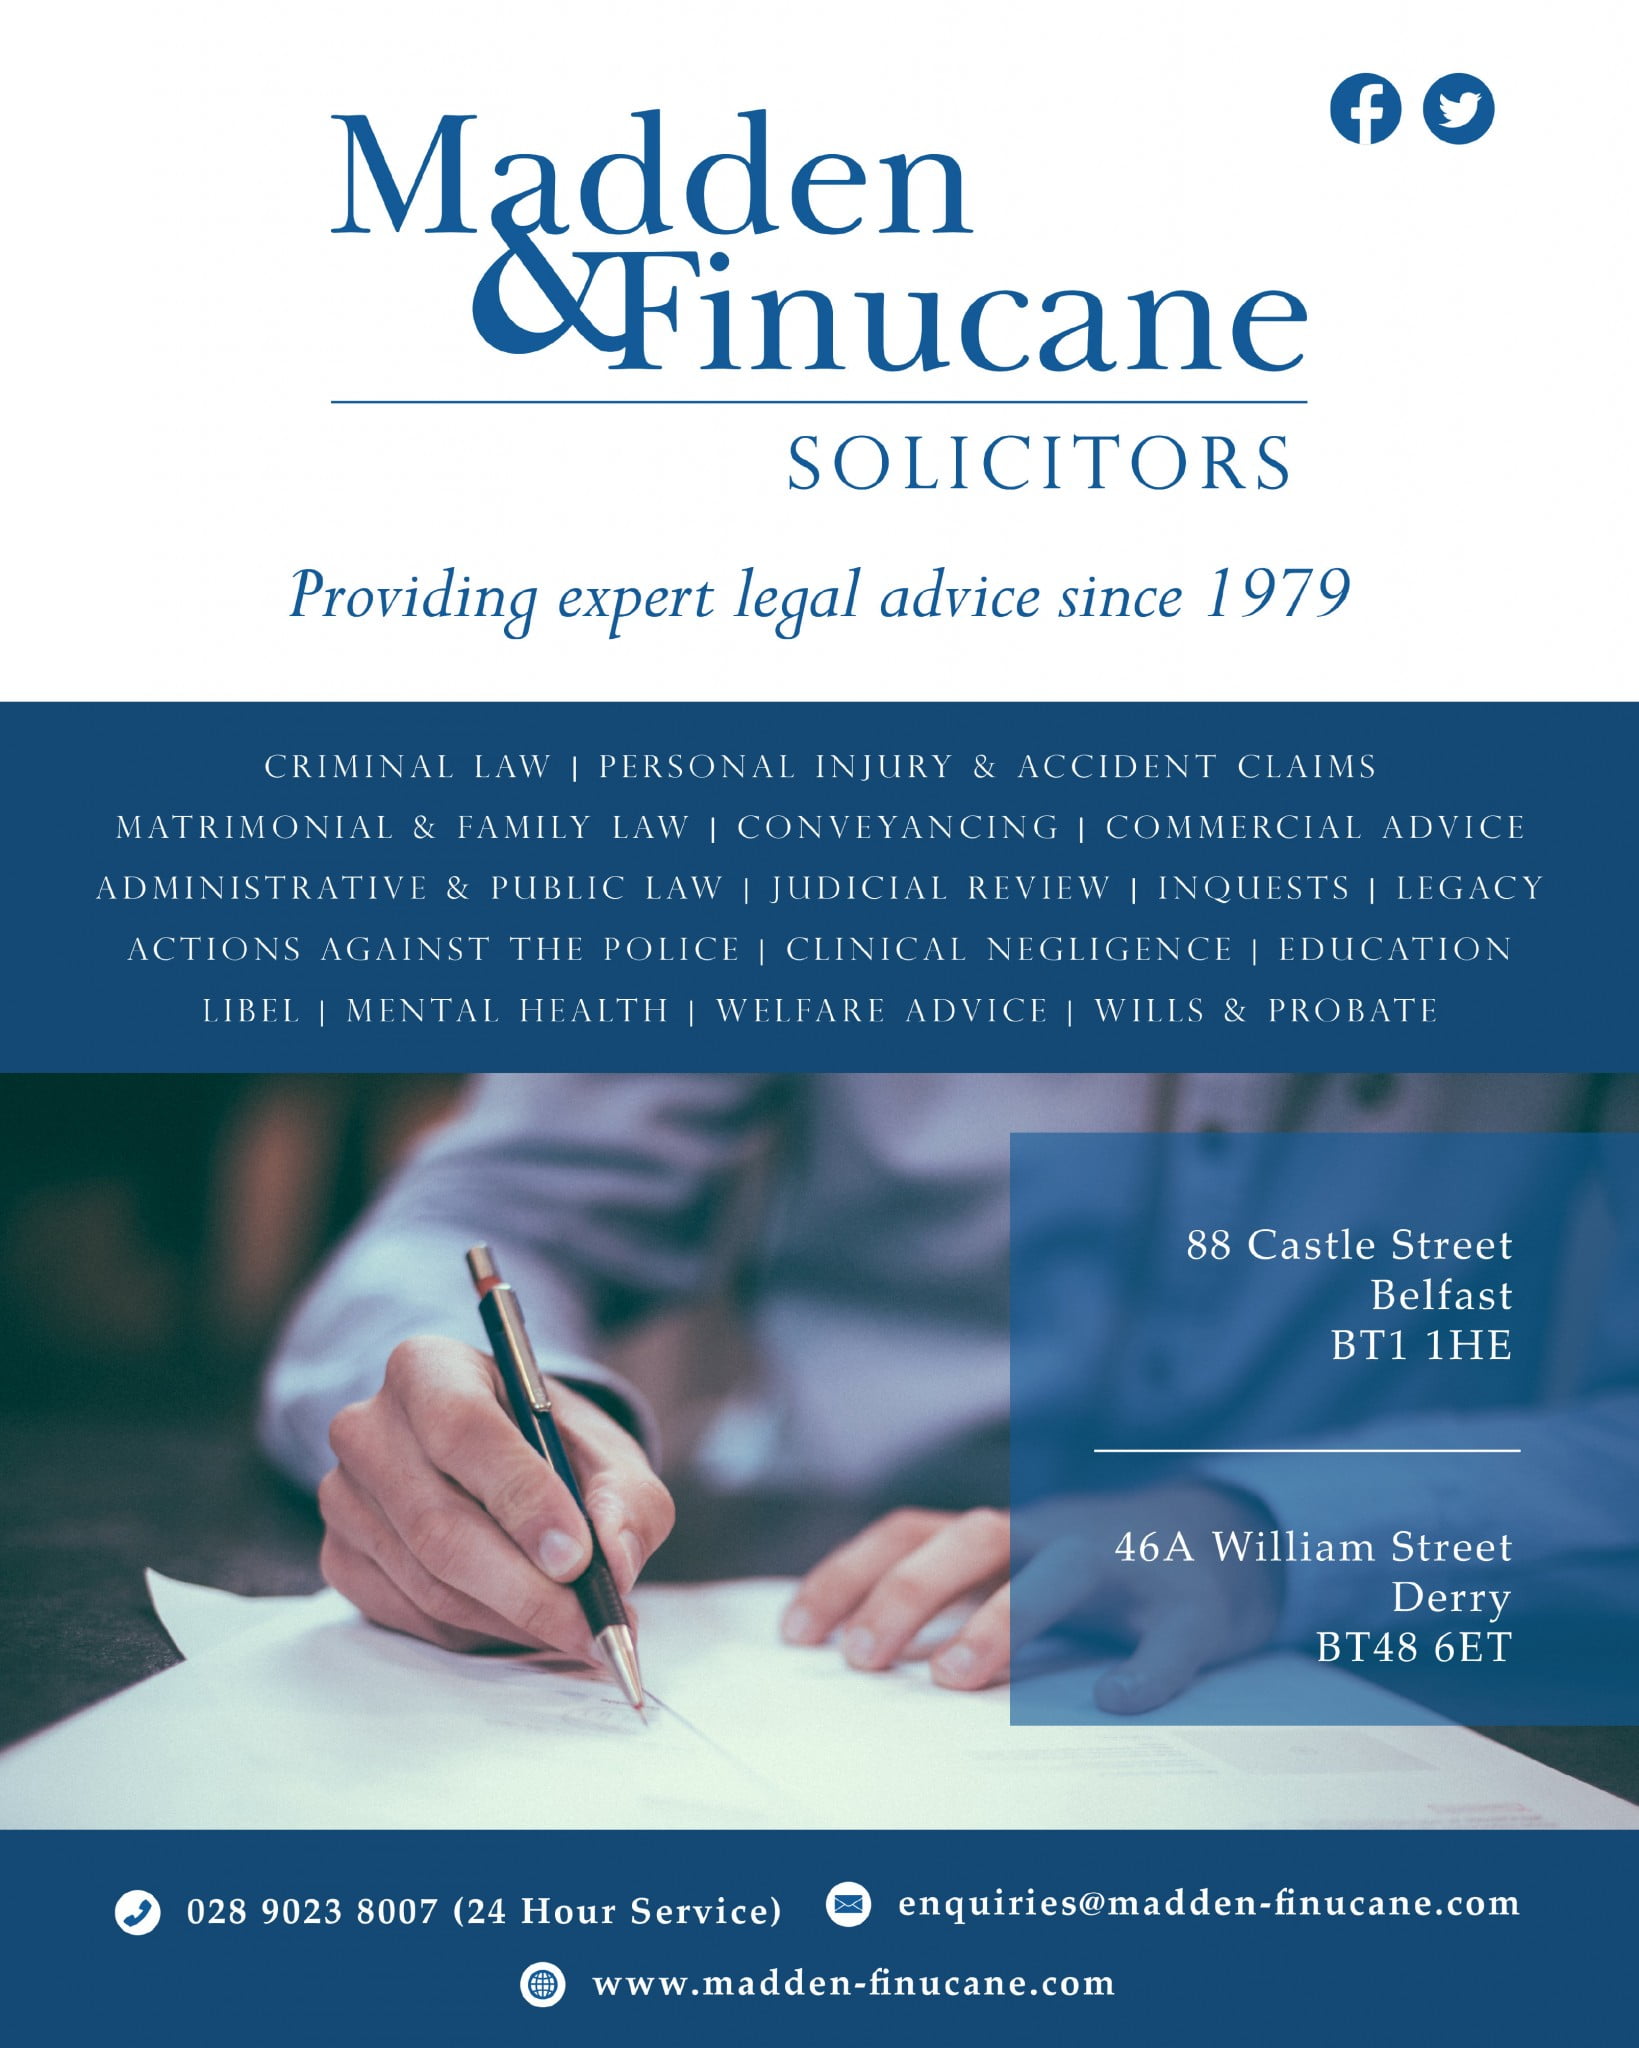 Madden & Finucane Solicitors - Providing expert legal advice since 1979